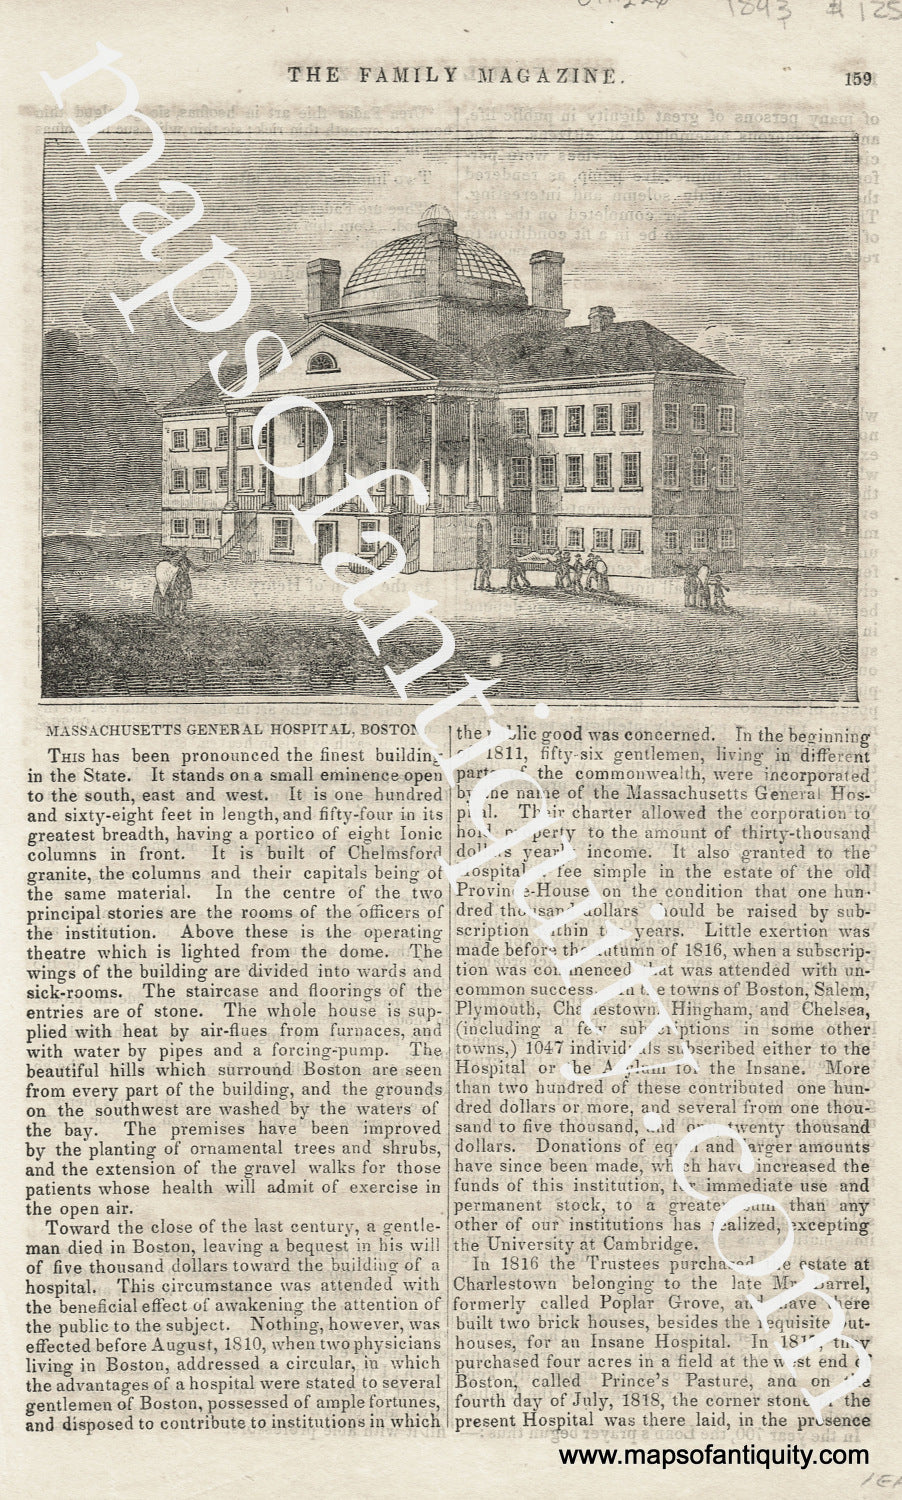 Antique-Uncolored-Print-Massachusetts-General-Hospital-Boston-Massachusetts-Boston-1839/1843-The-Family-Magazine-Maps-Of-Antiquity